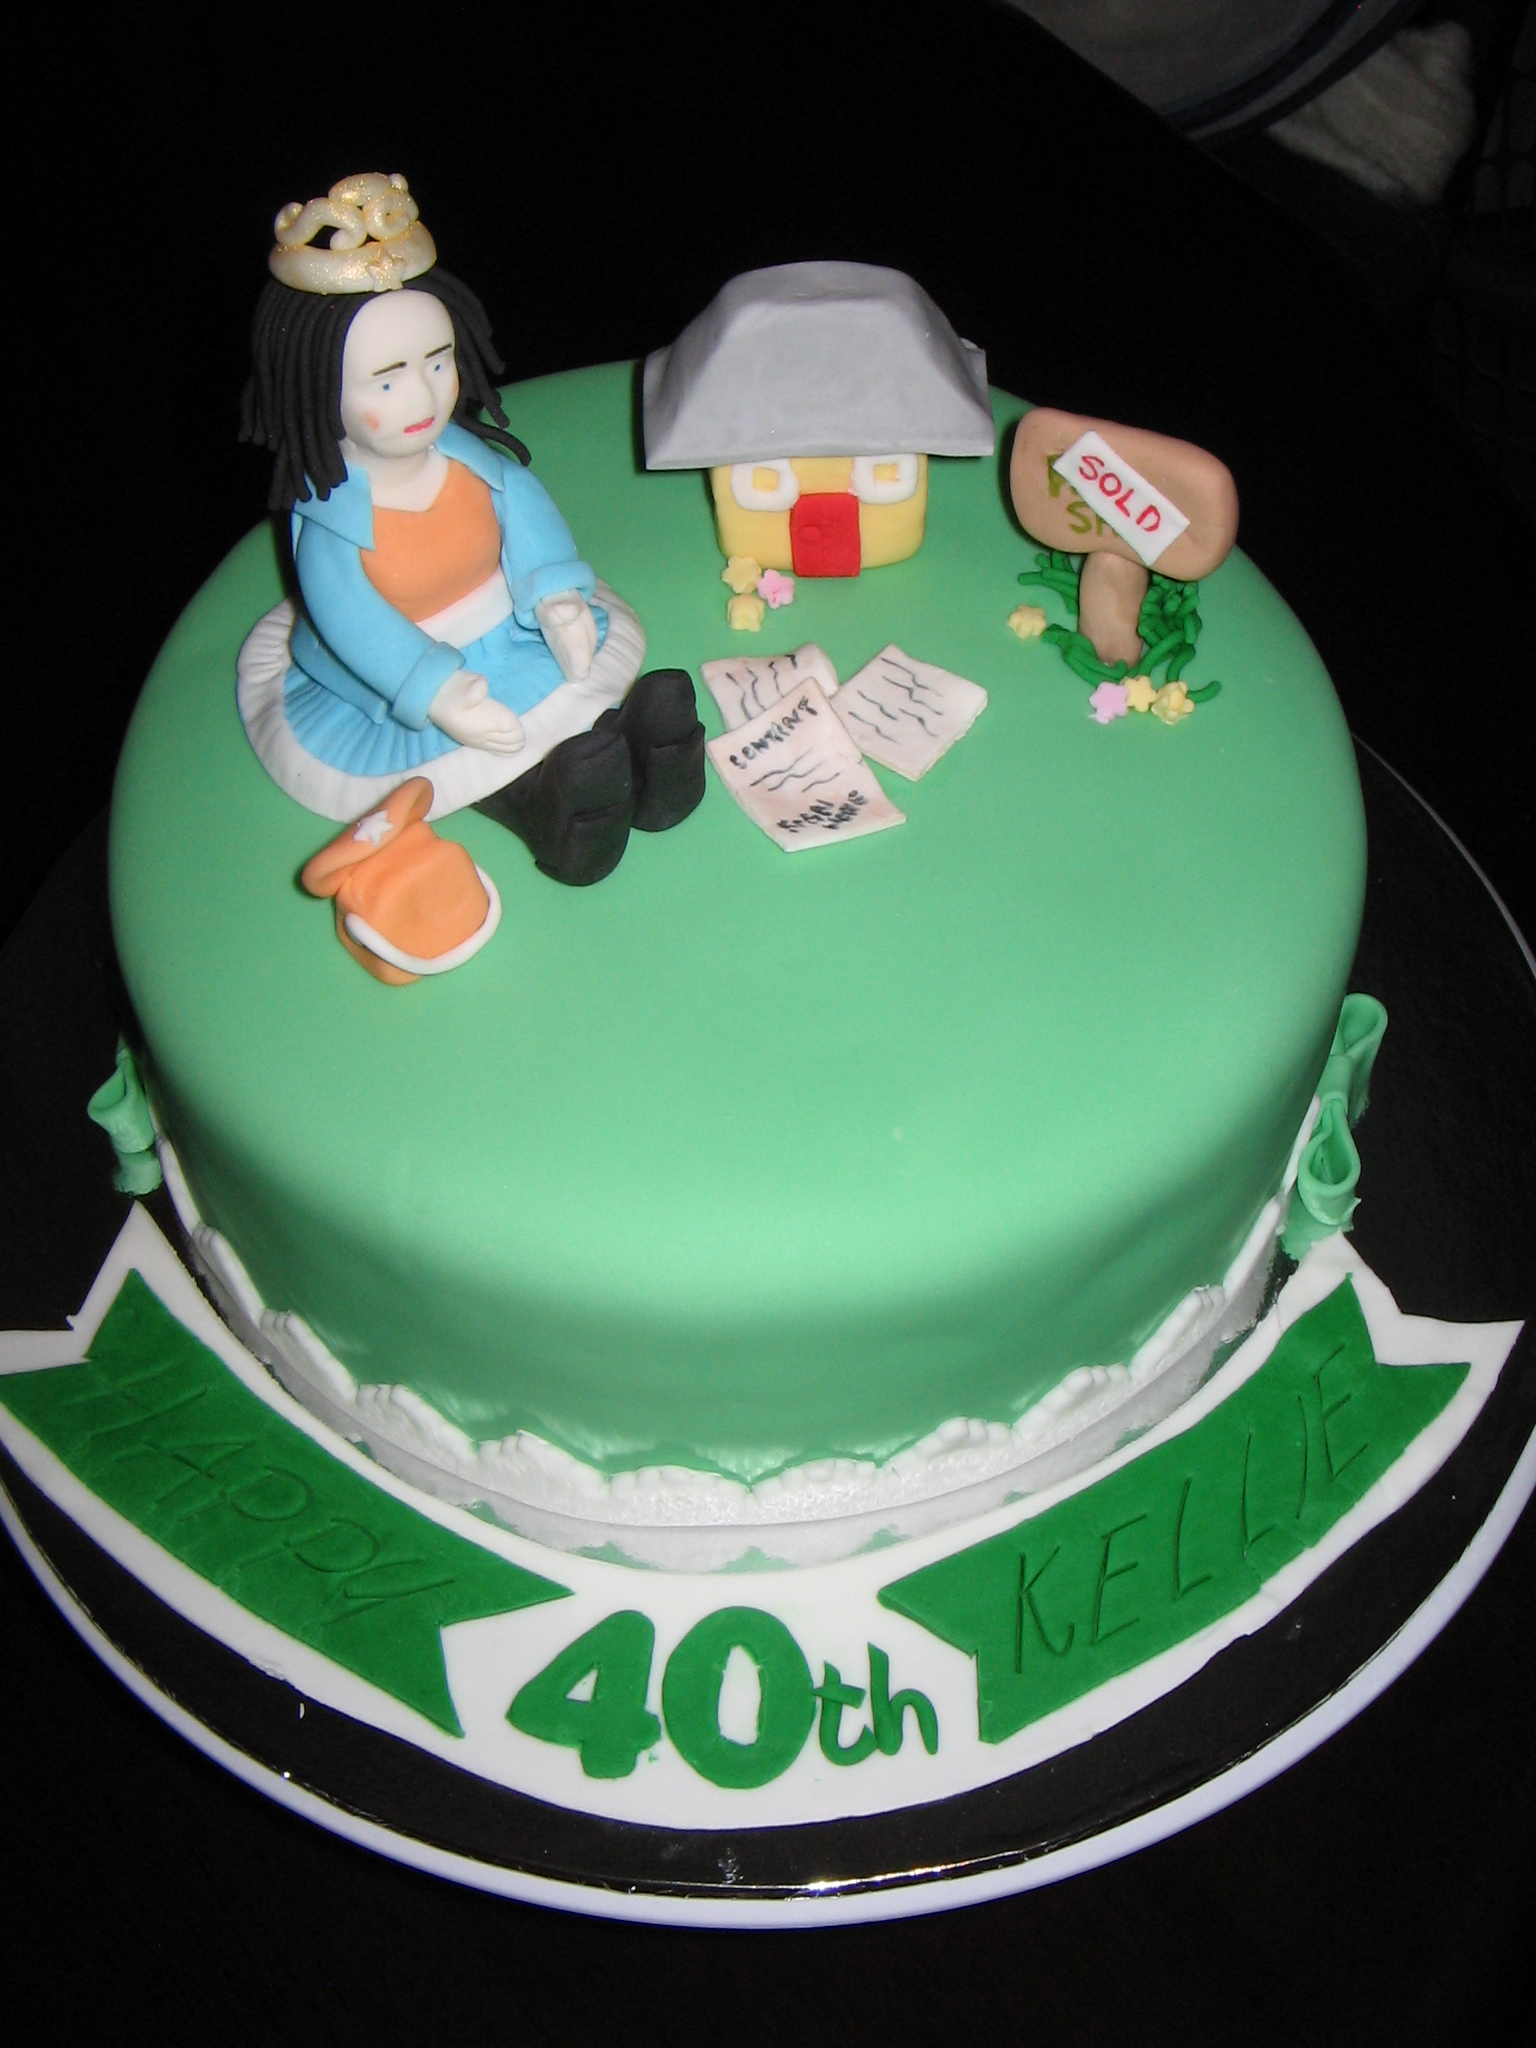 40th birthday cake topper by suzy q designs ...